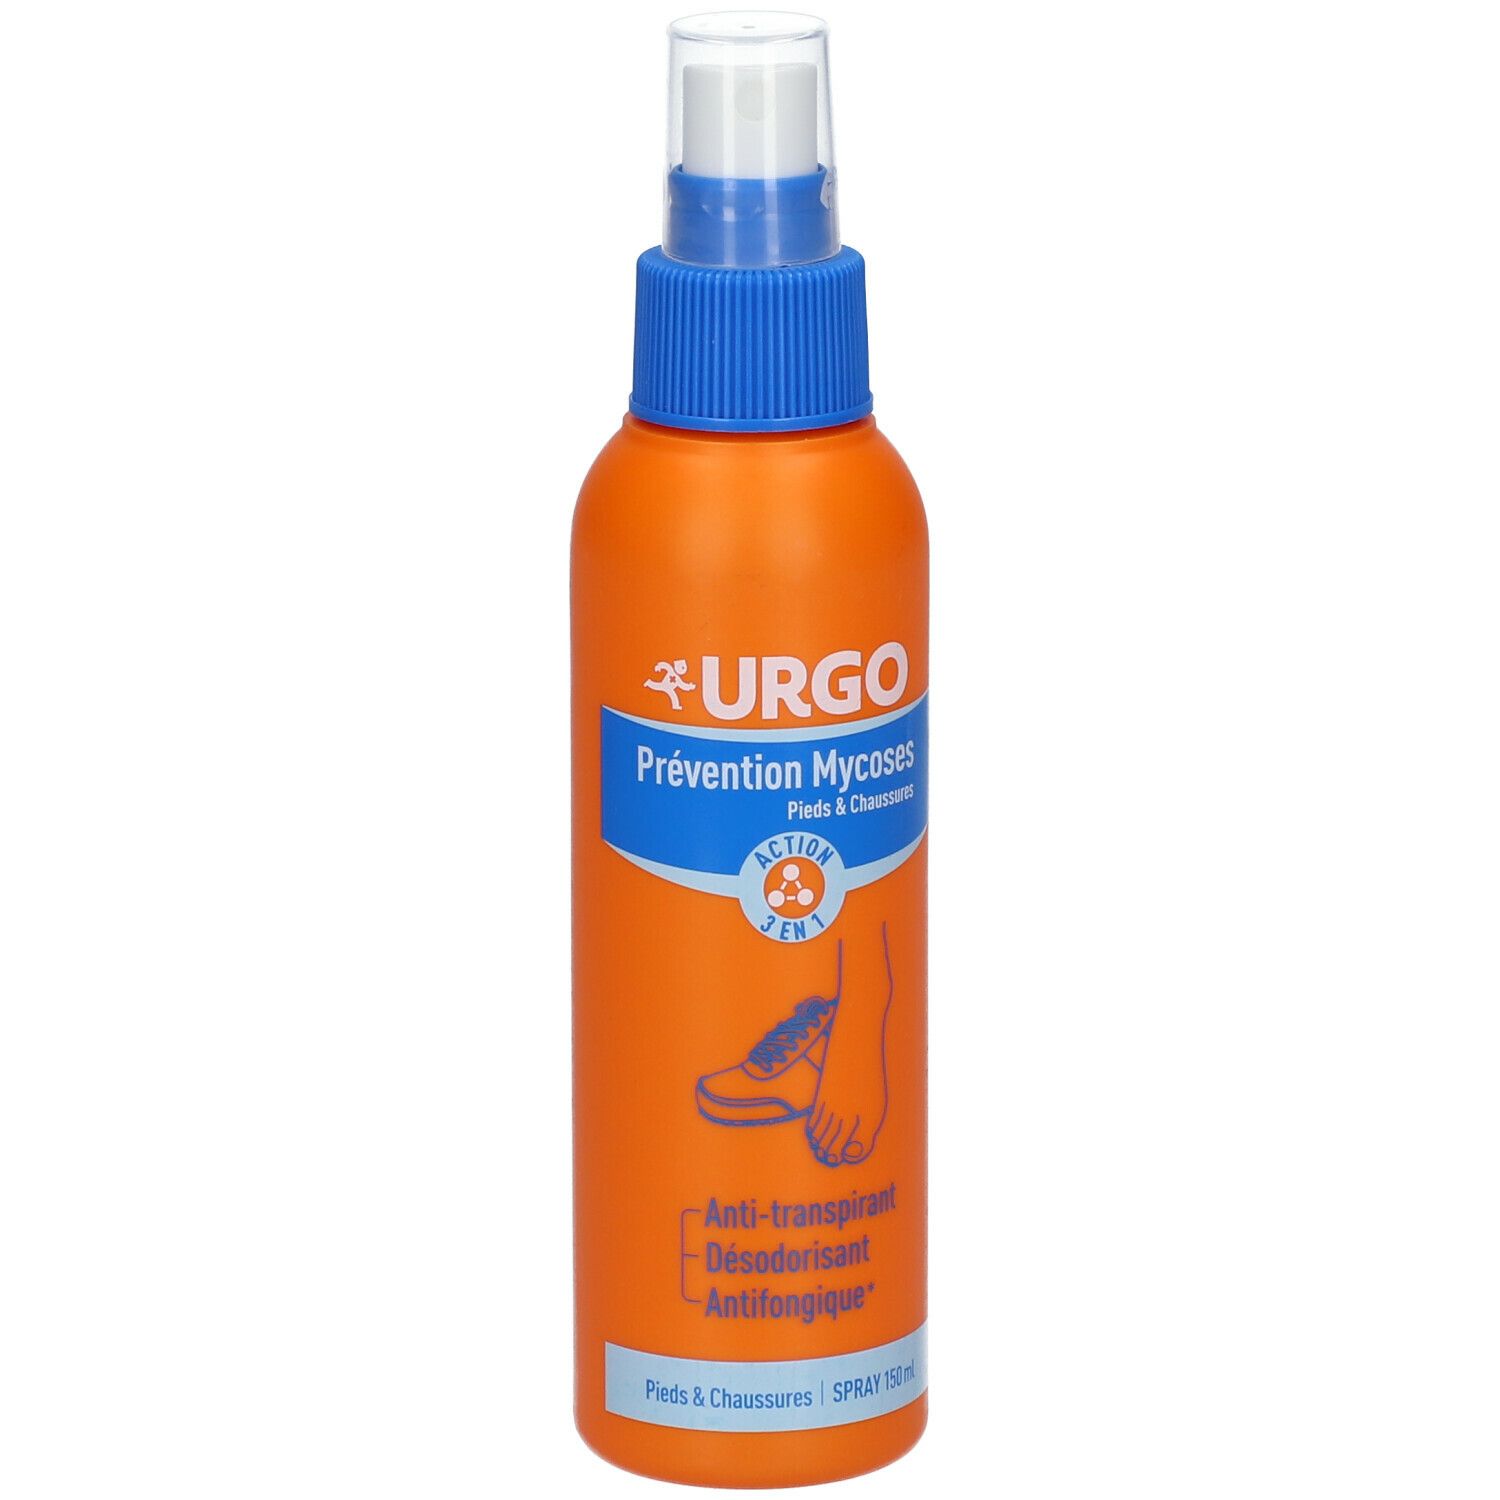 URGO Prévention Mycoses Pieds & Chaussures Action 3 en 1 Spray